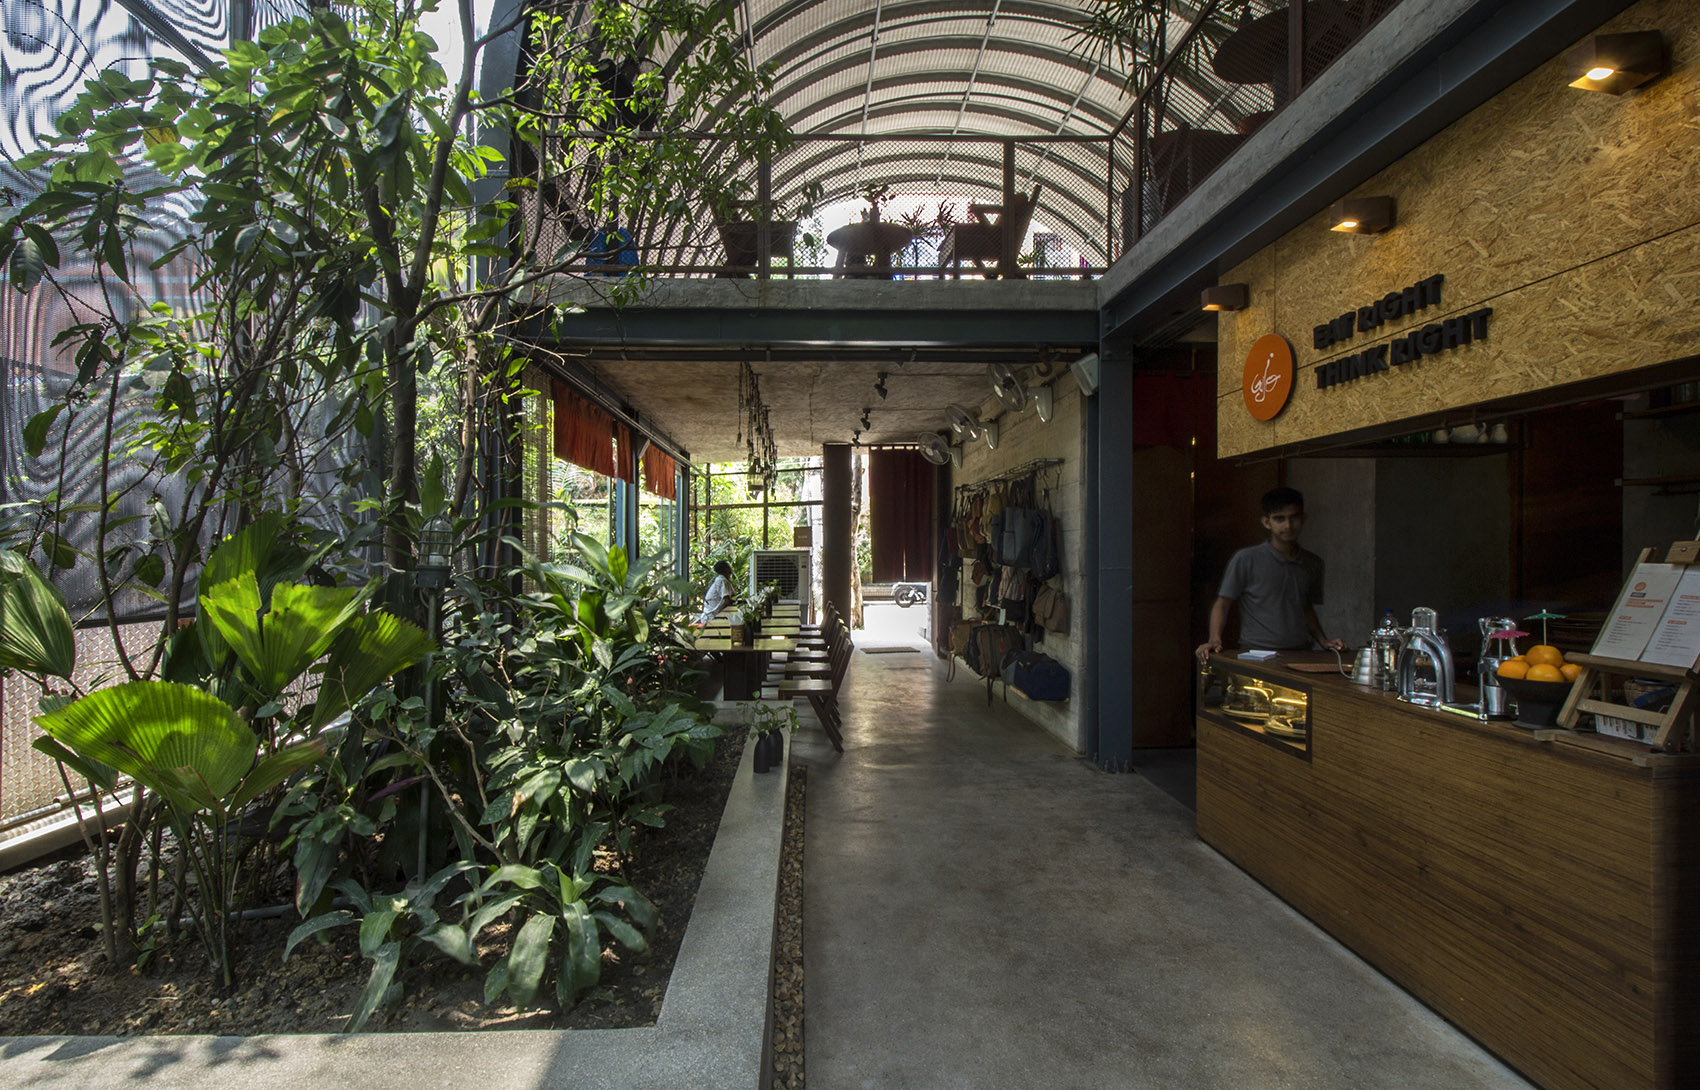 Ajo创意餐厅，孟加拉国/景色与微风流淌其间-71